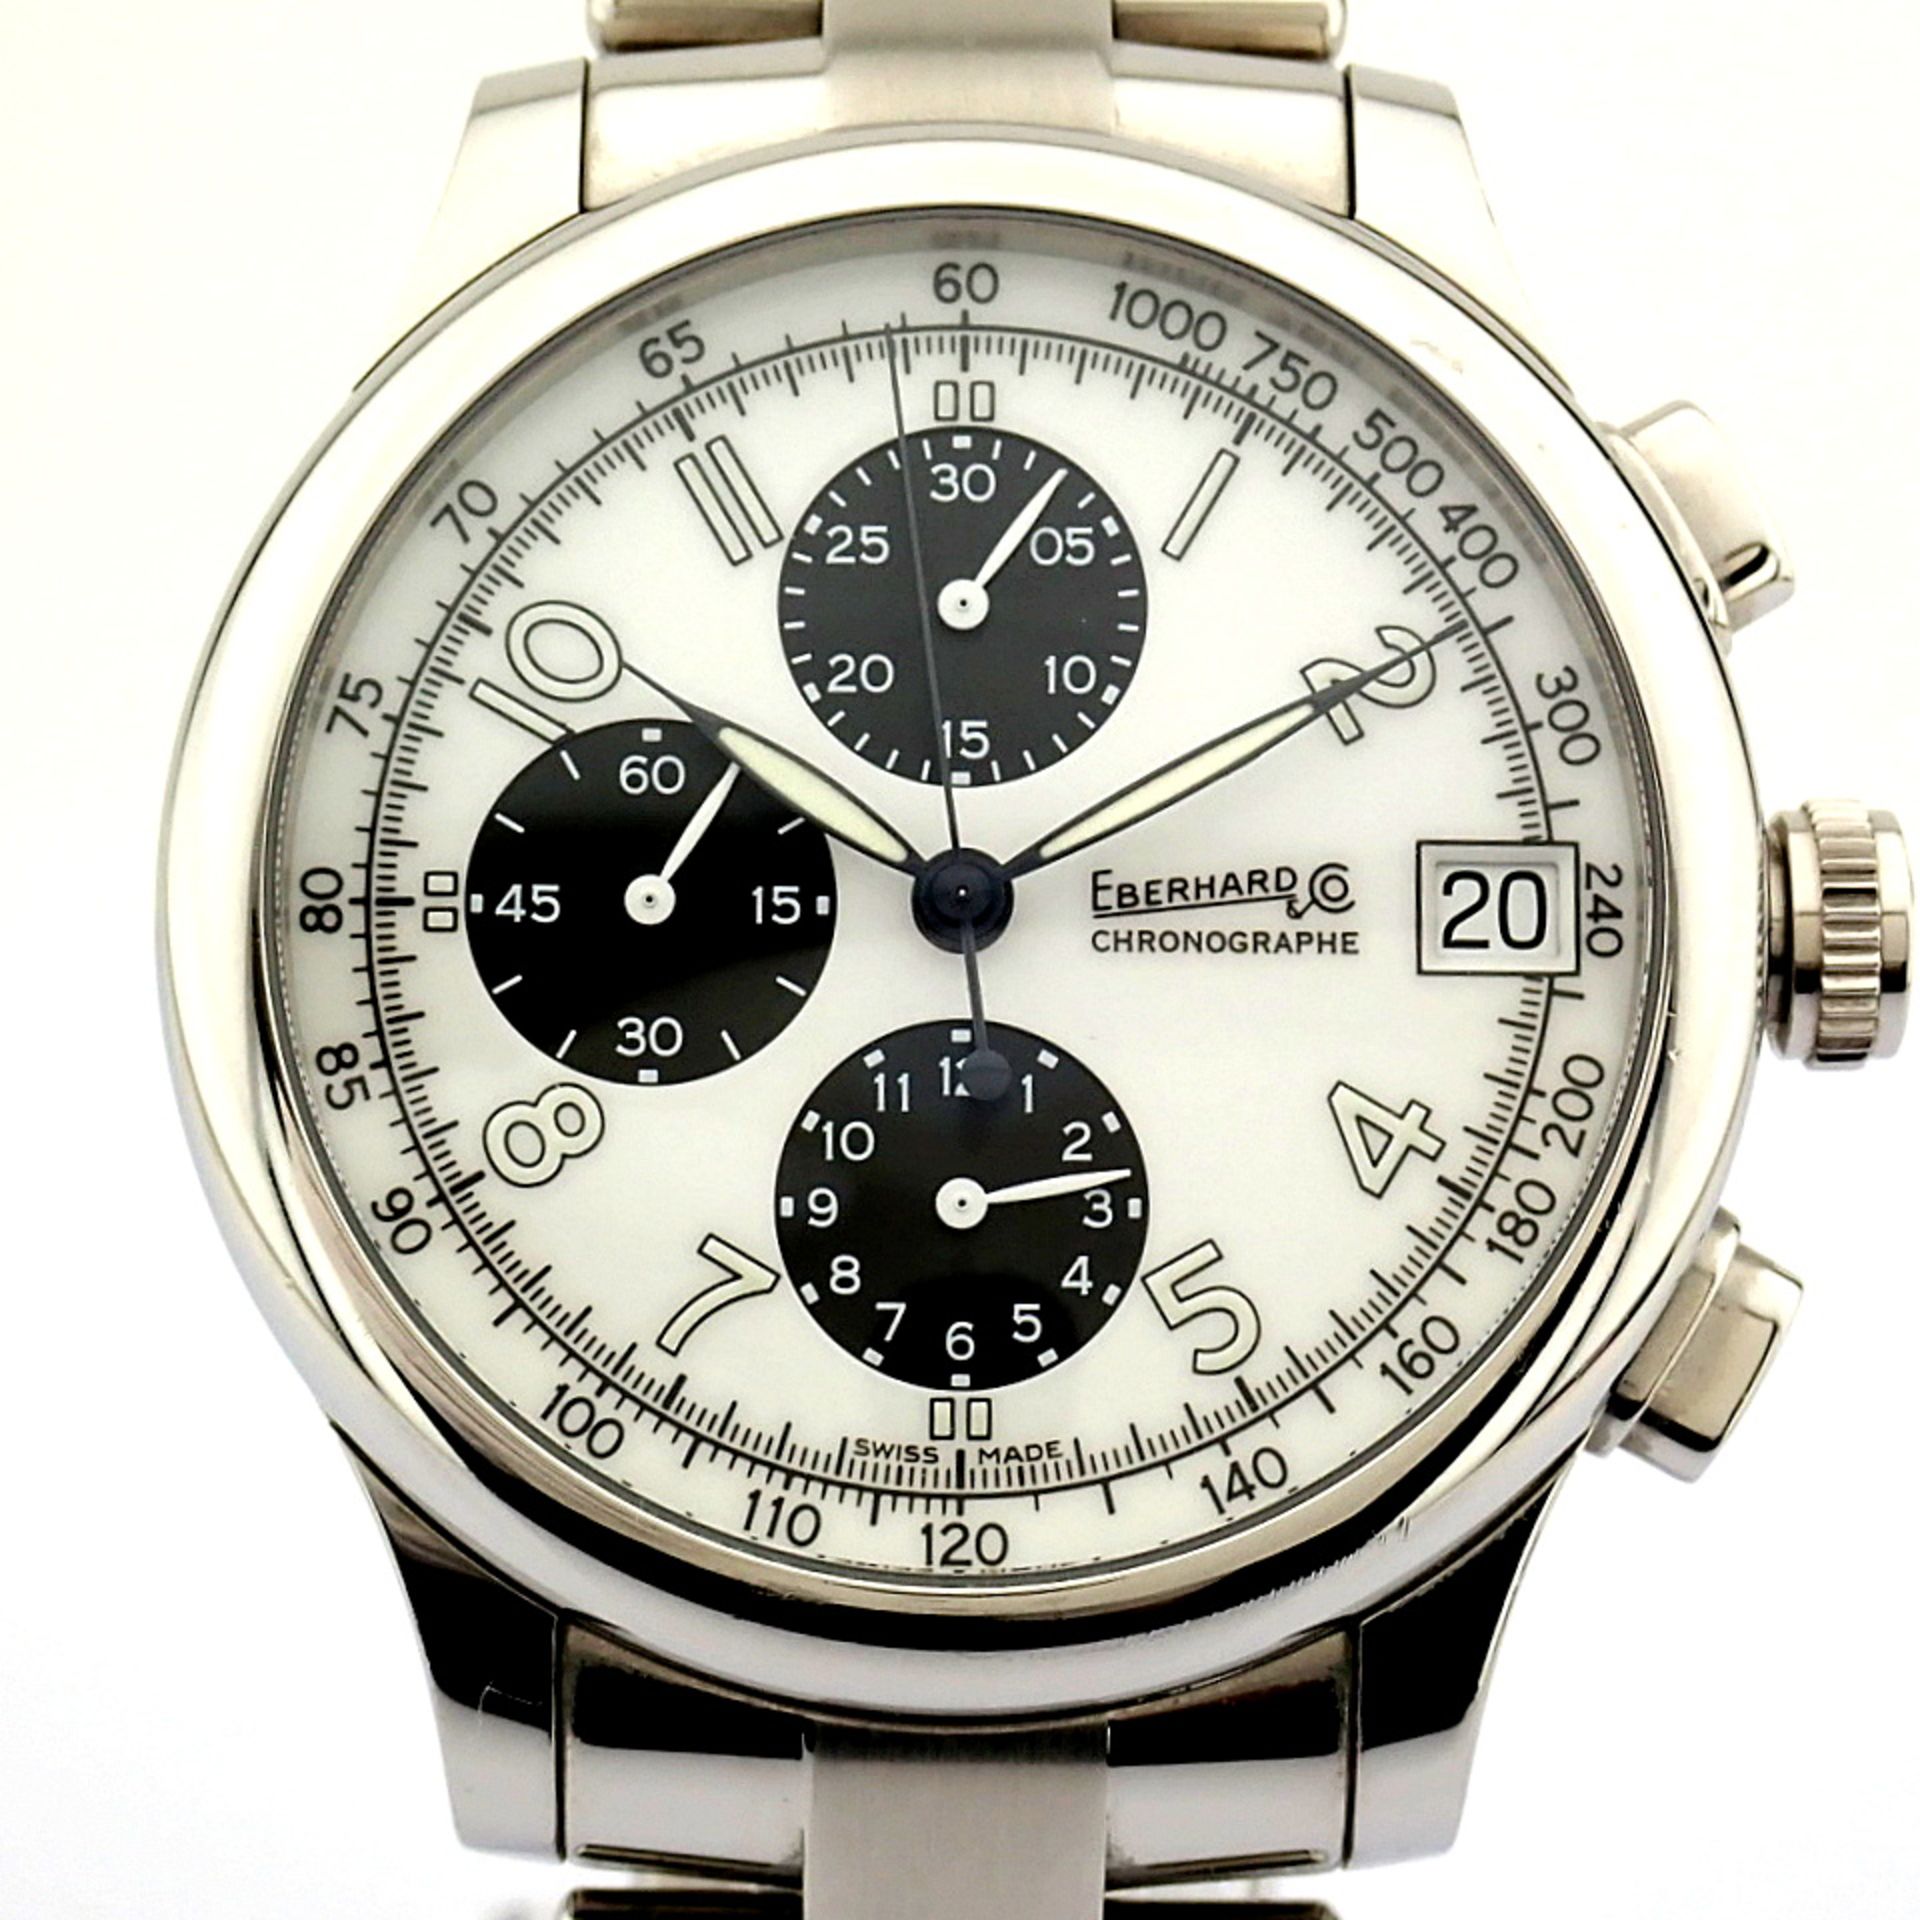 Eberhard & Co. / Traversetolo Chronograph Automatic - Gentlmen's Steel Wrist Watch - Image 8 of 11